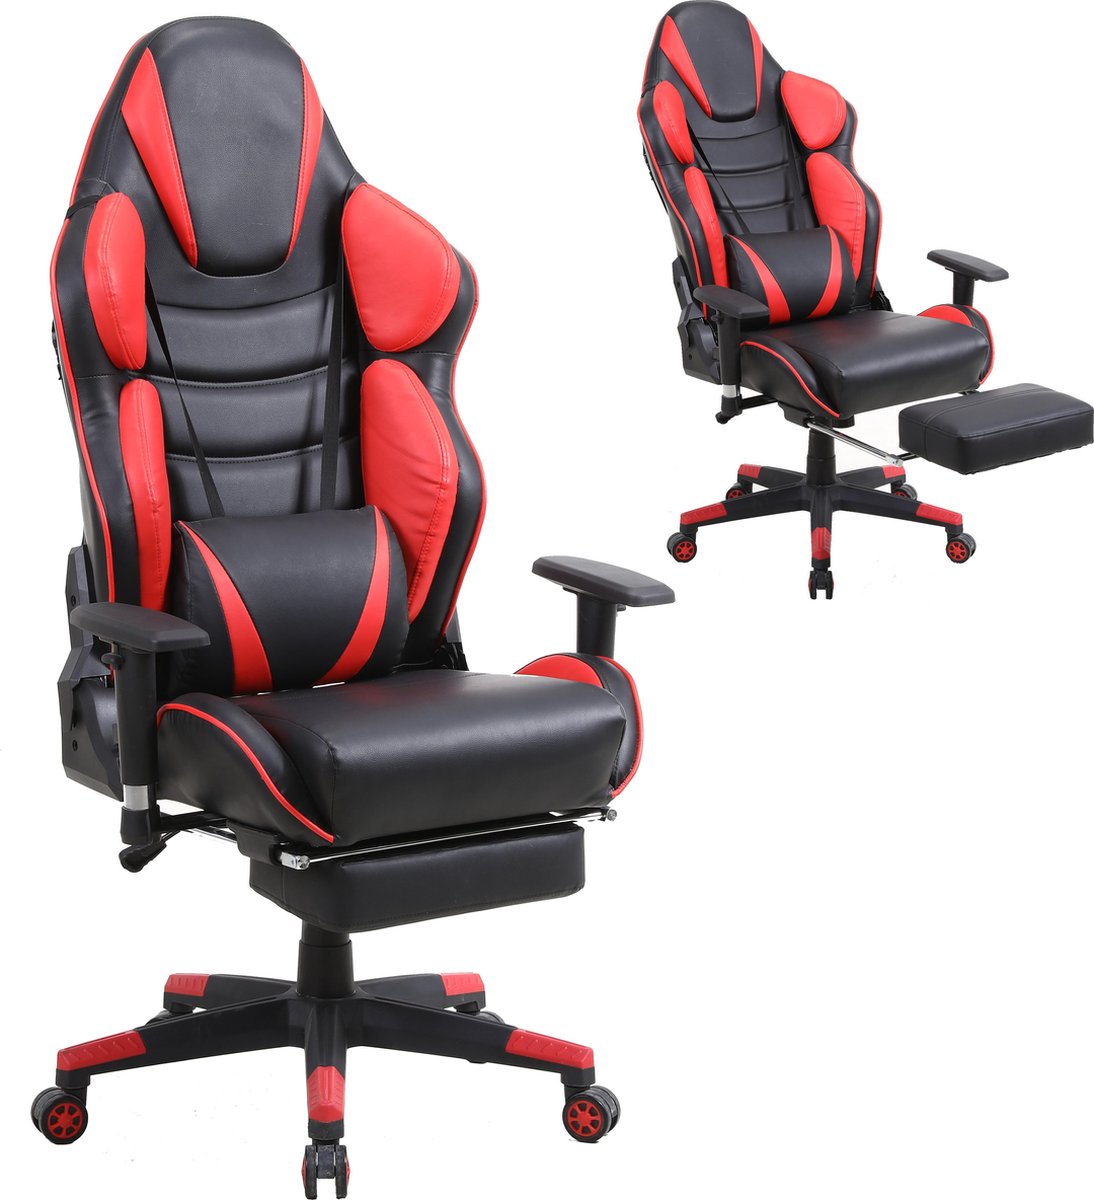 Alora Gaming stoel Big Boss rood met Nekkussen & Verstelbaar Rugkussen - Game chair - Game Stoel - Gamestoel - Bureaustoel - Office Chair